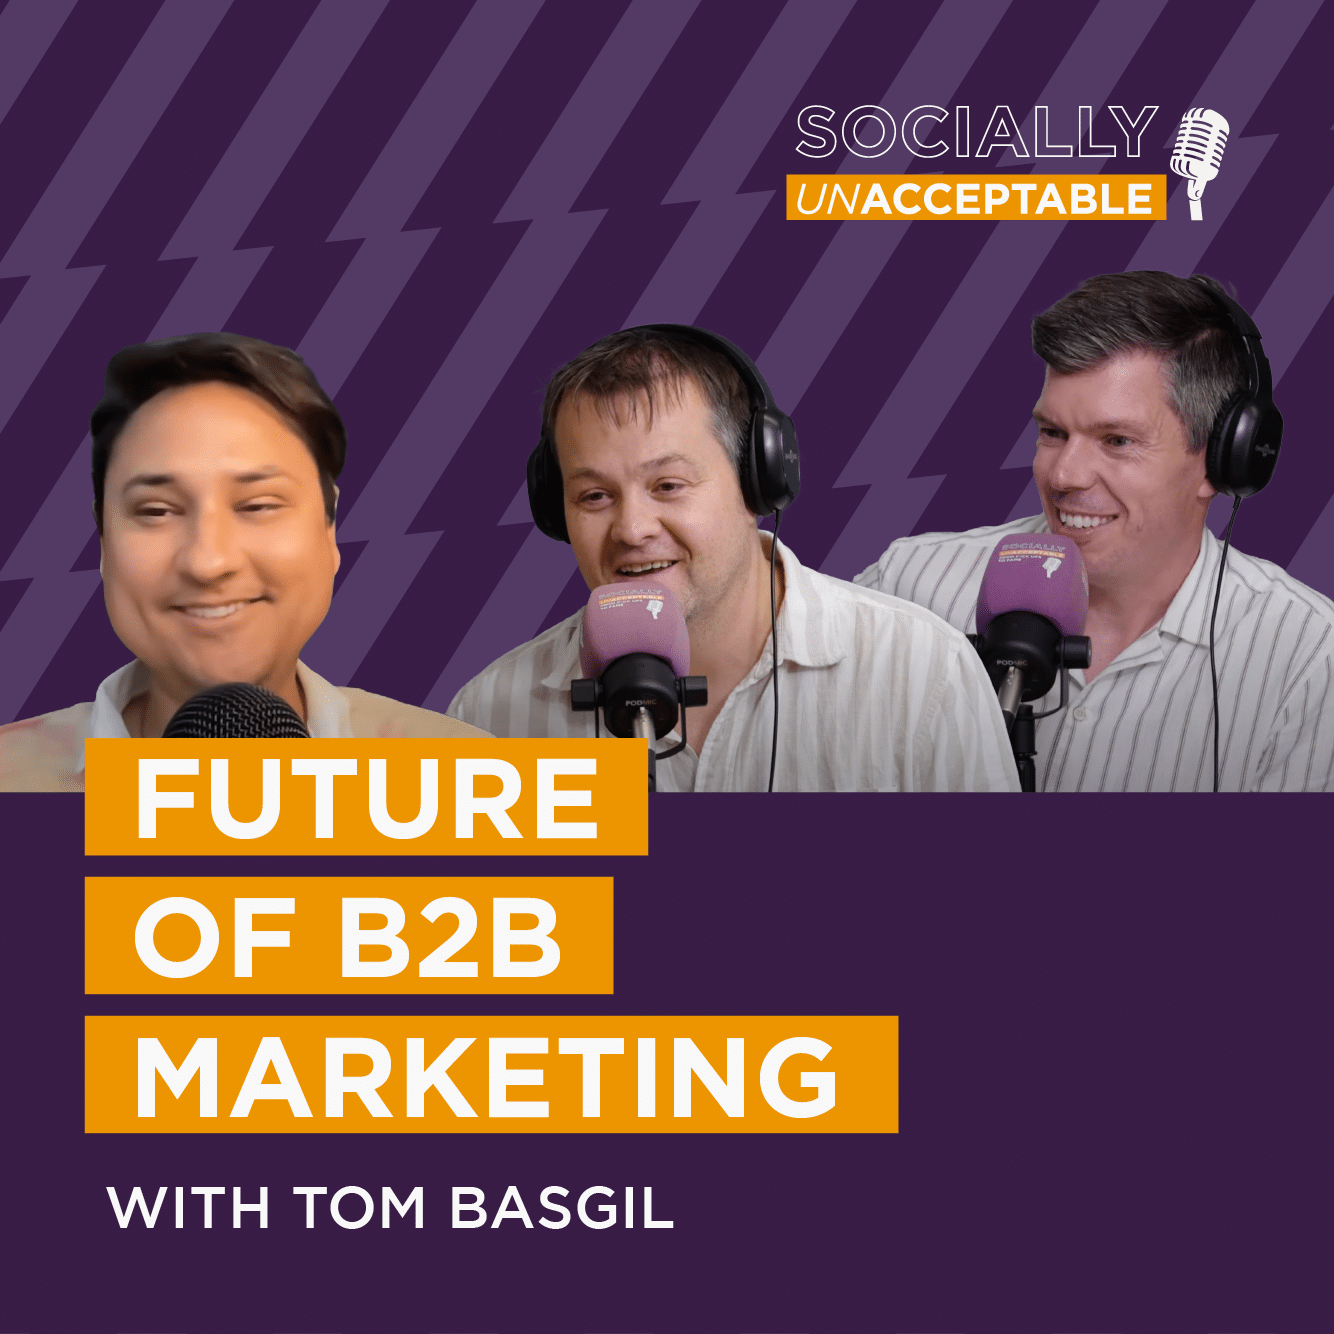 The Future of B2B Marketing – with Tom Basgil